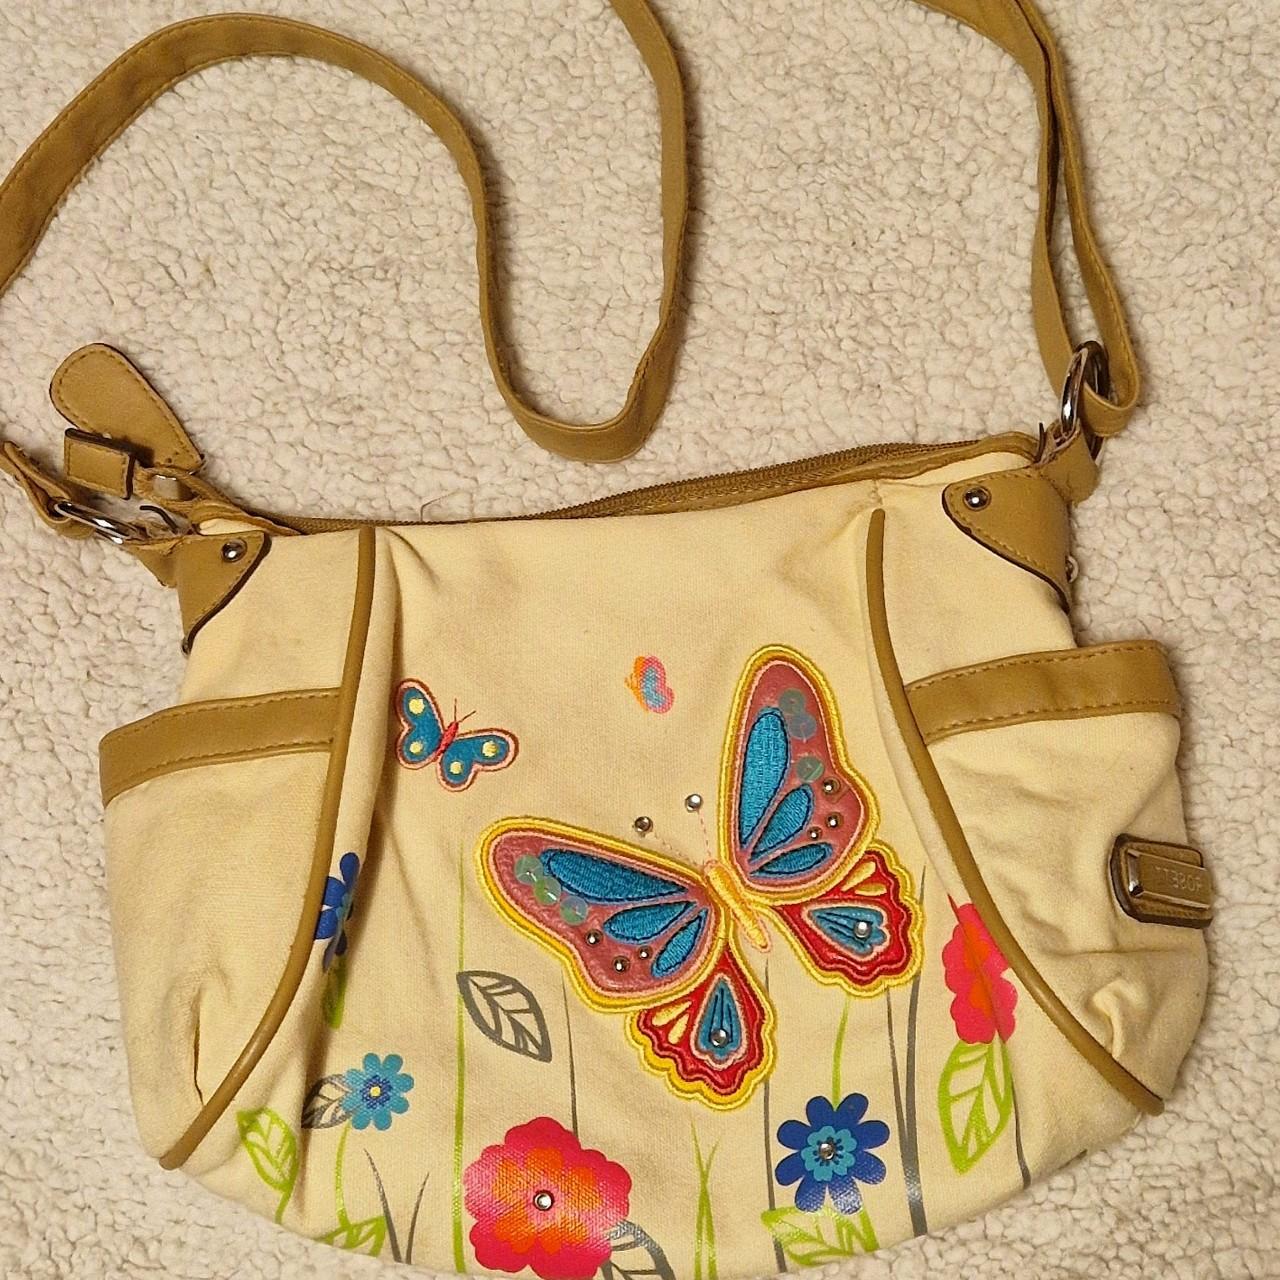 Rosetti Butterfly Embroidered Handbag | eBay